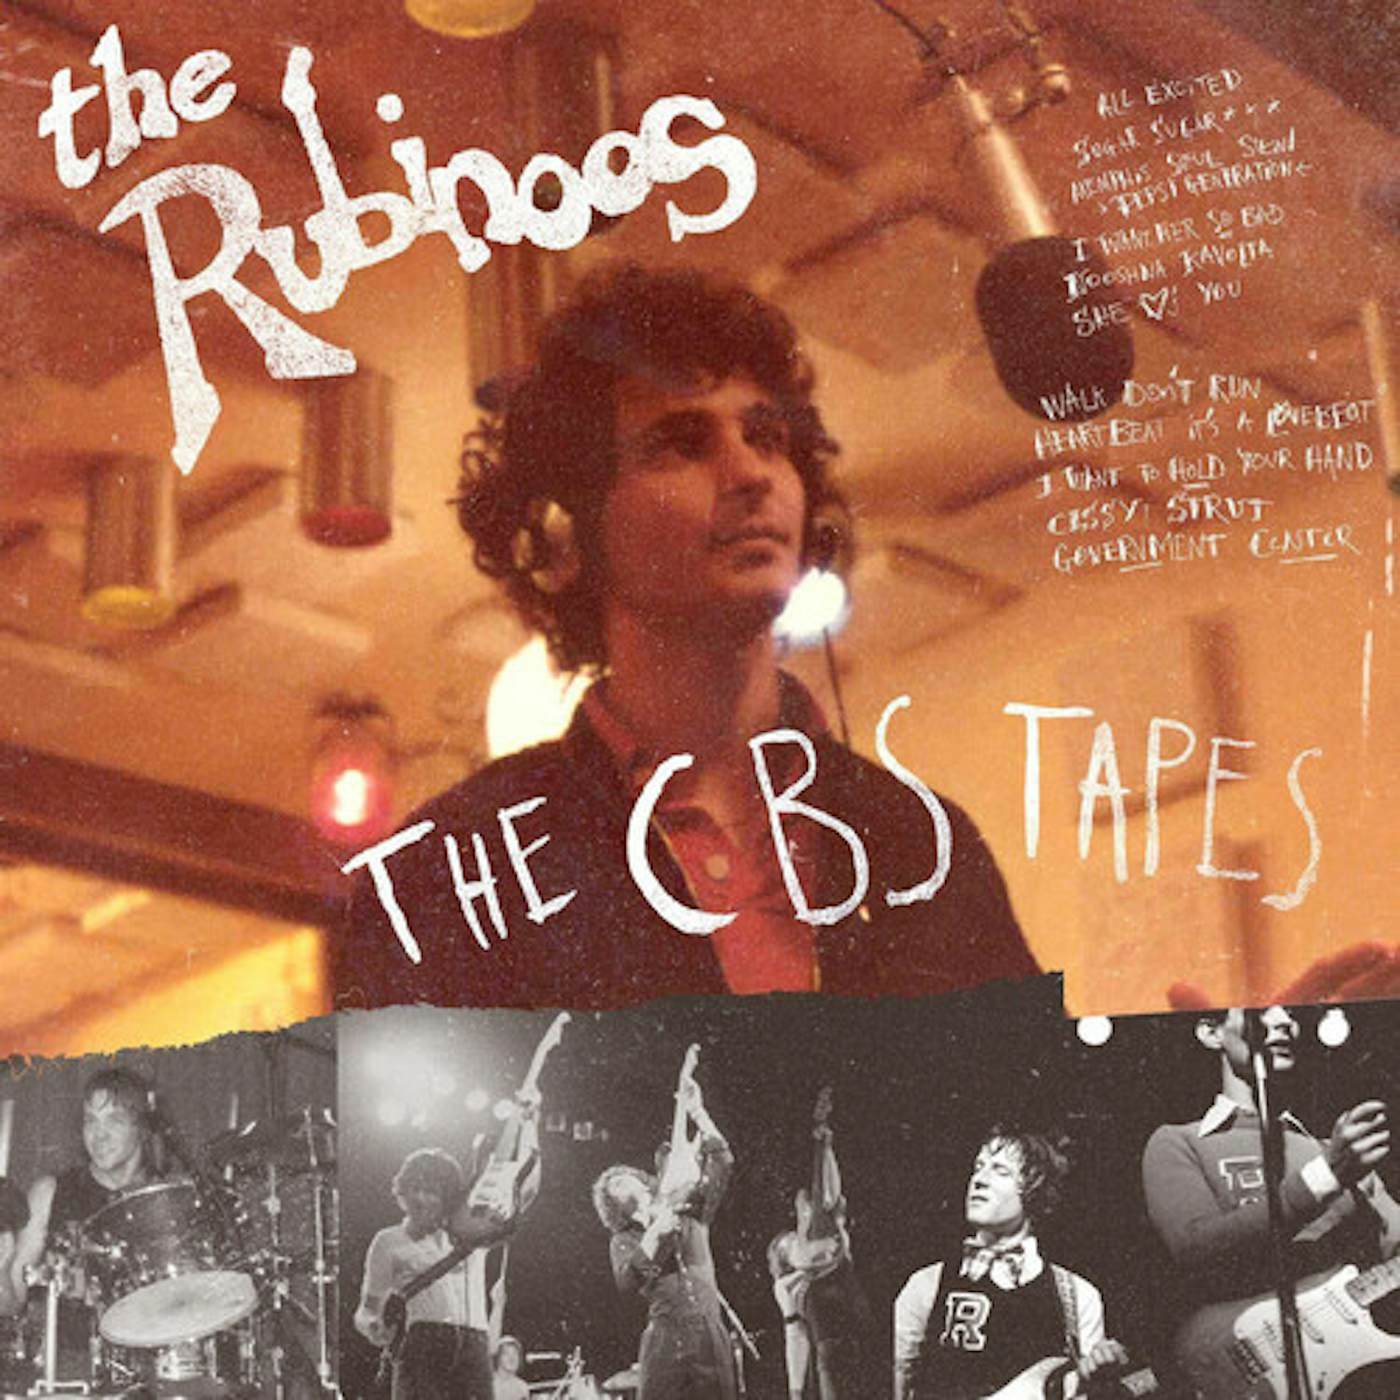 The Rubinoos CBS TAPES Vinyl Record